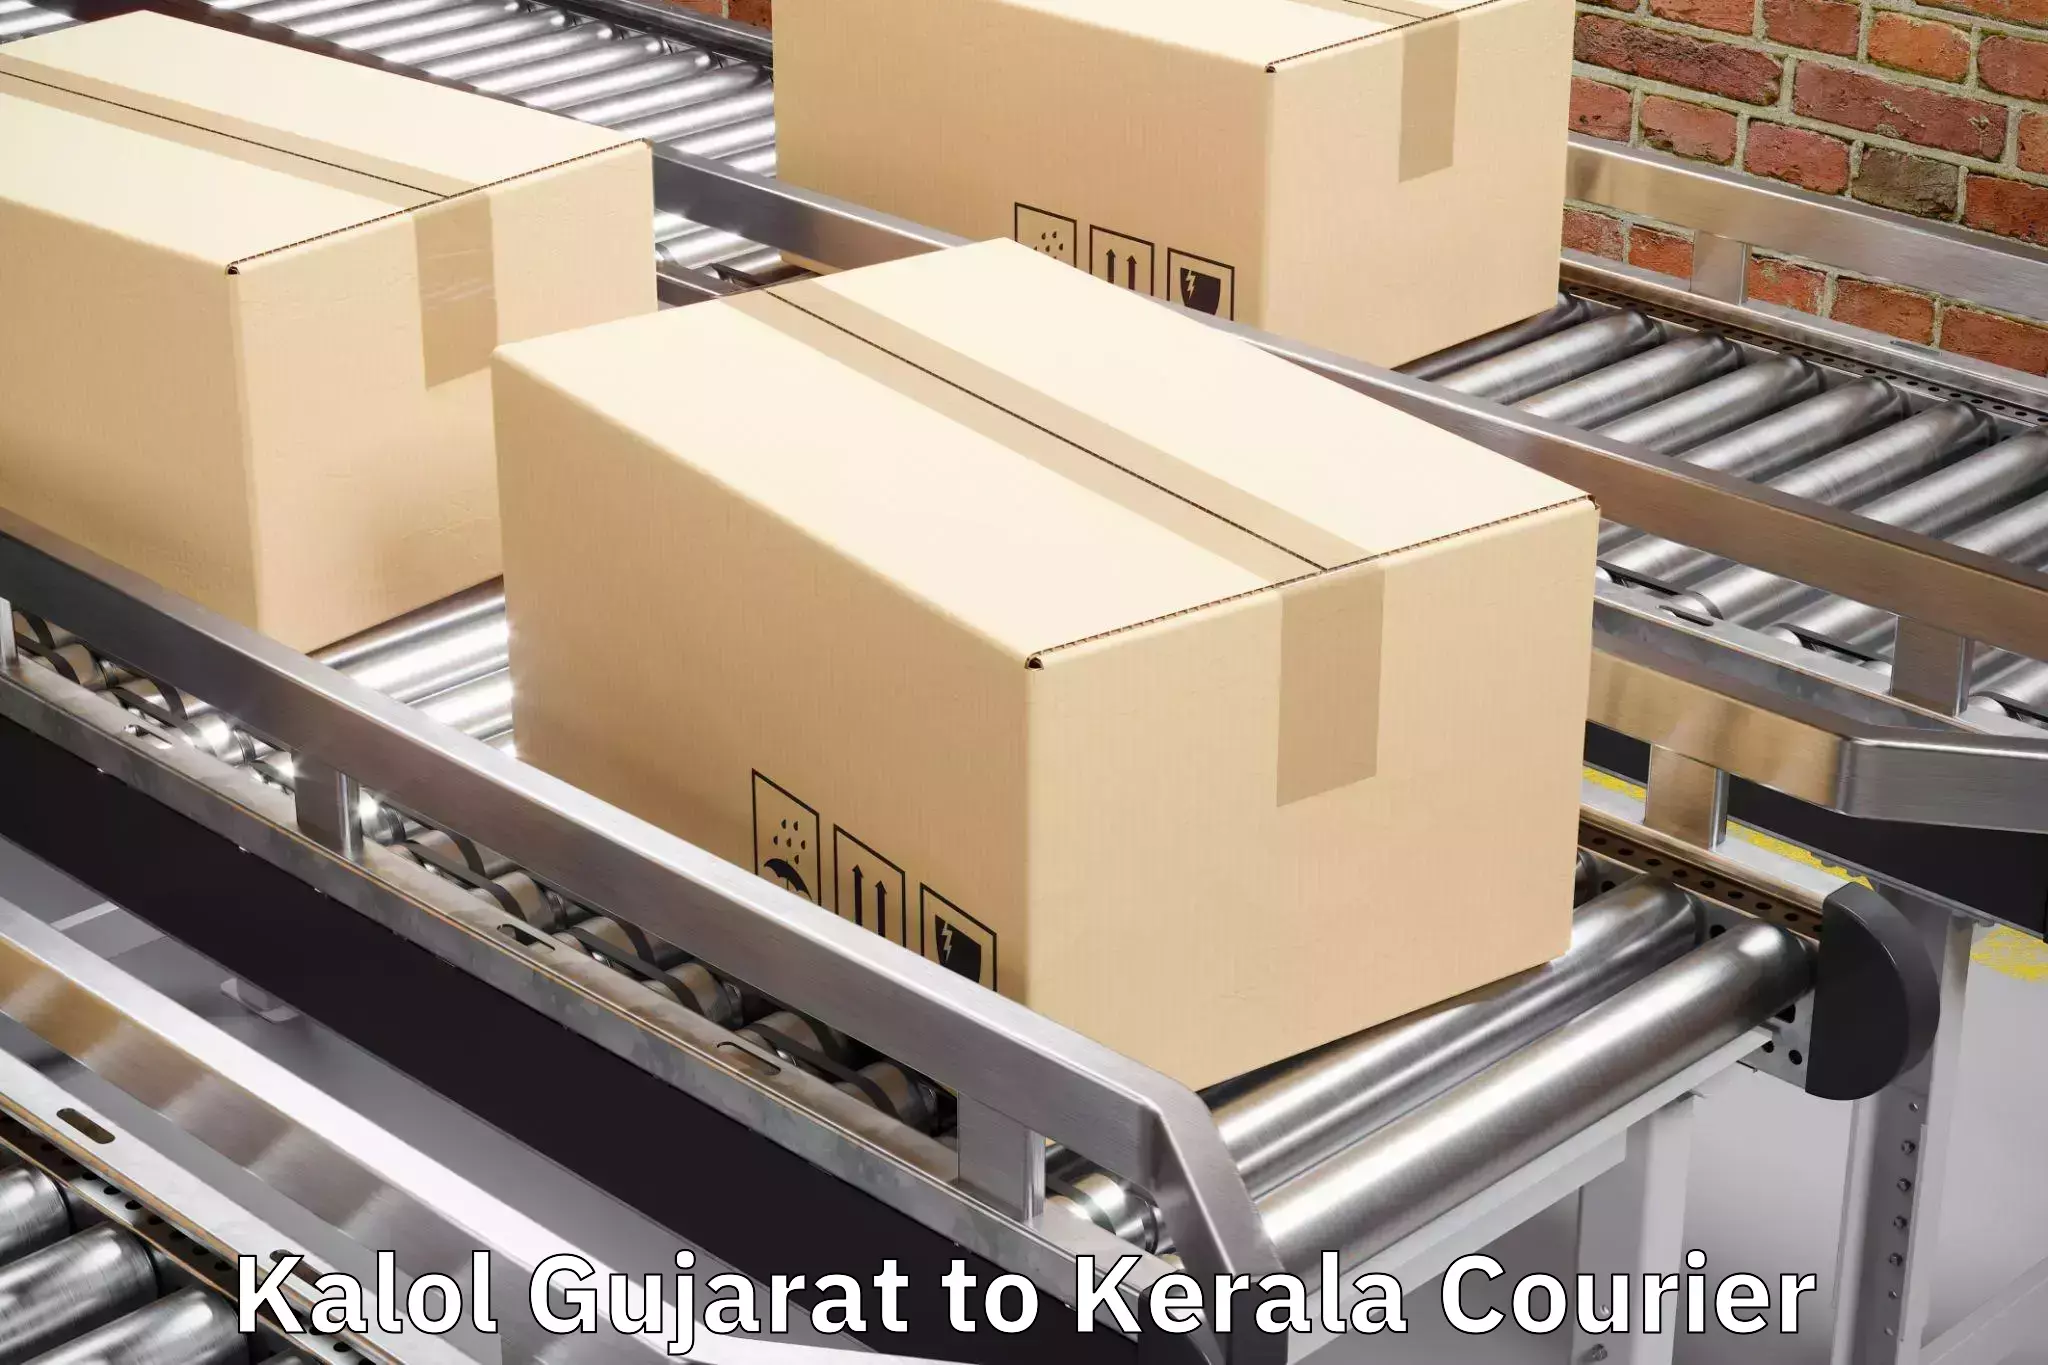 Baggage delivery technology Kalol Gujarat to Palakkad